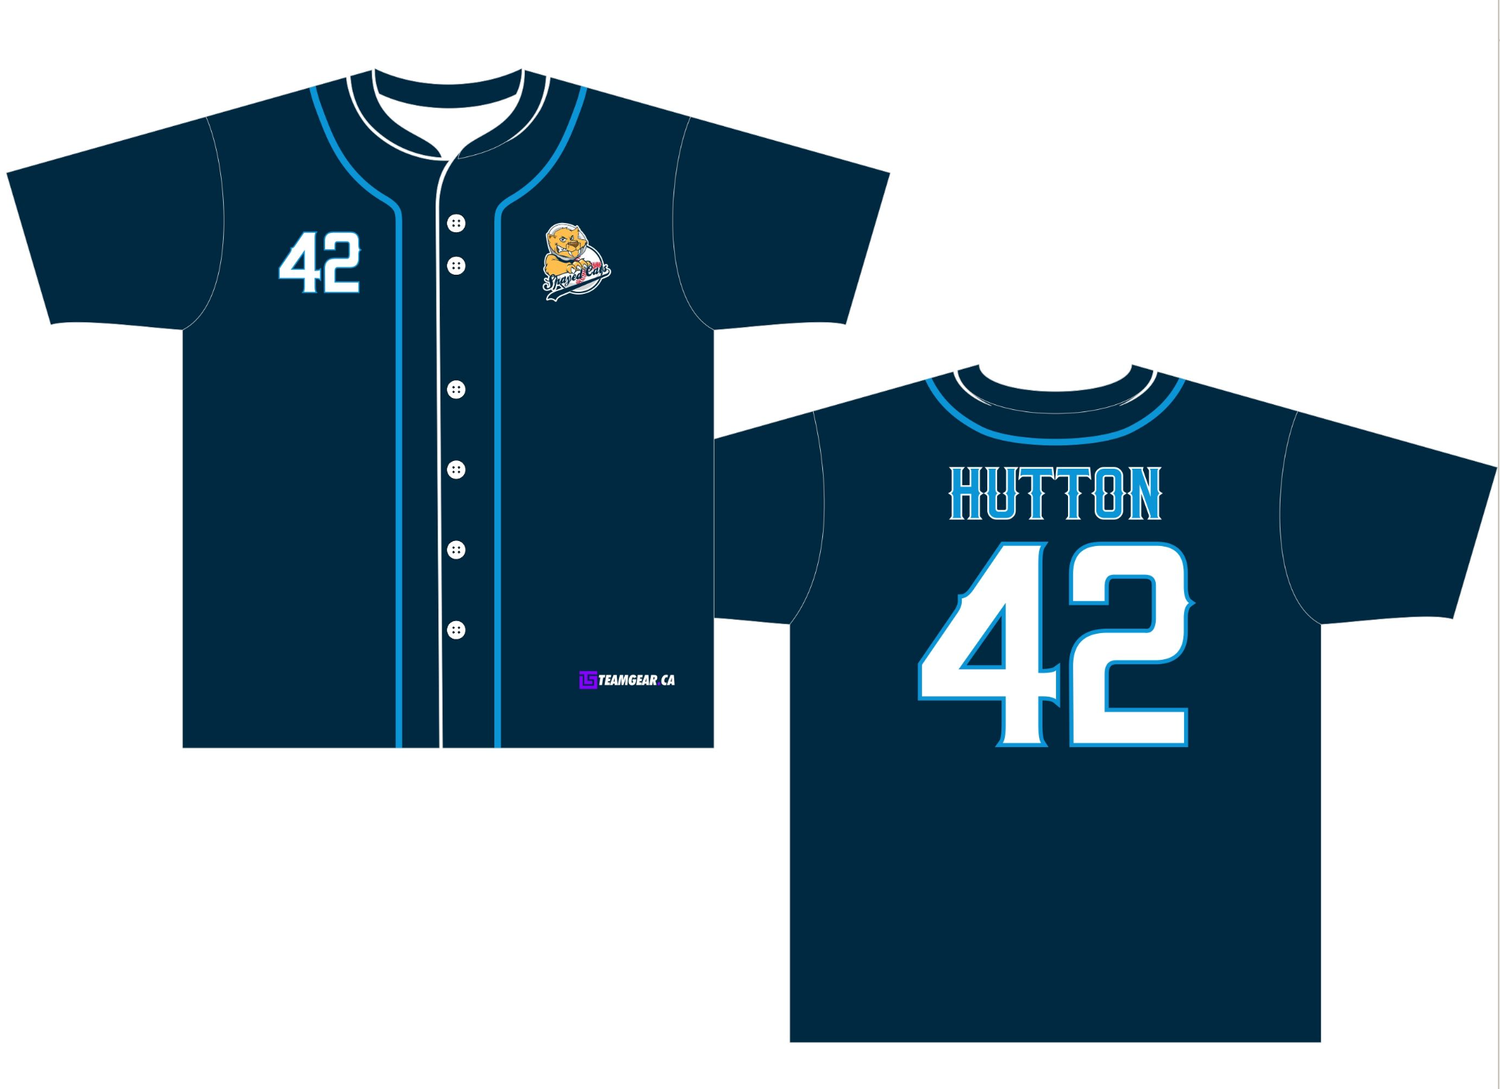 Personalized Toronto Blue Jays Baseball Full Printing 3D Hawaiian Shirt -  White - Senprintmart Store